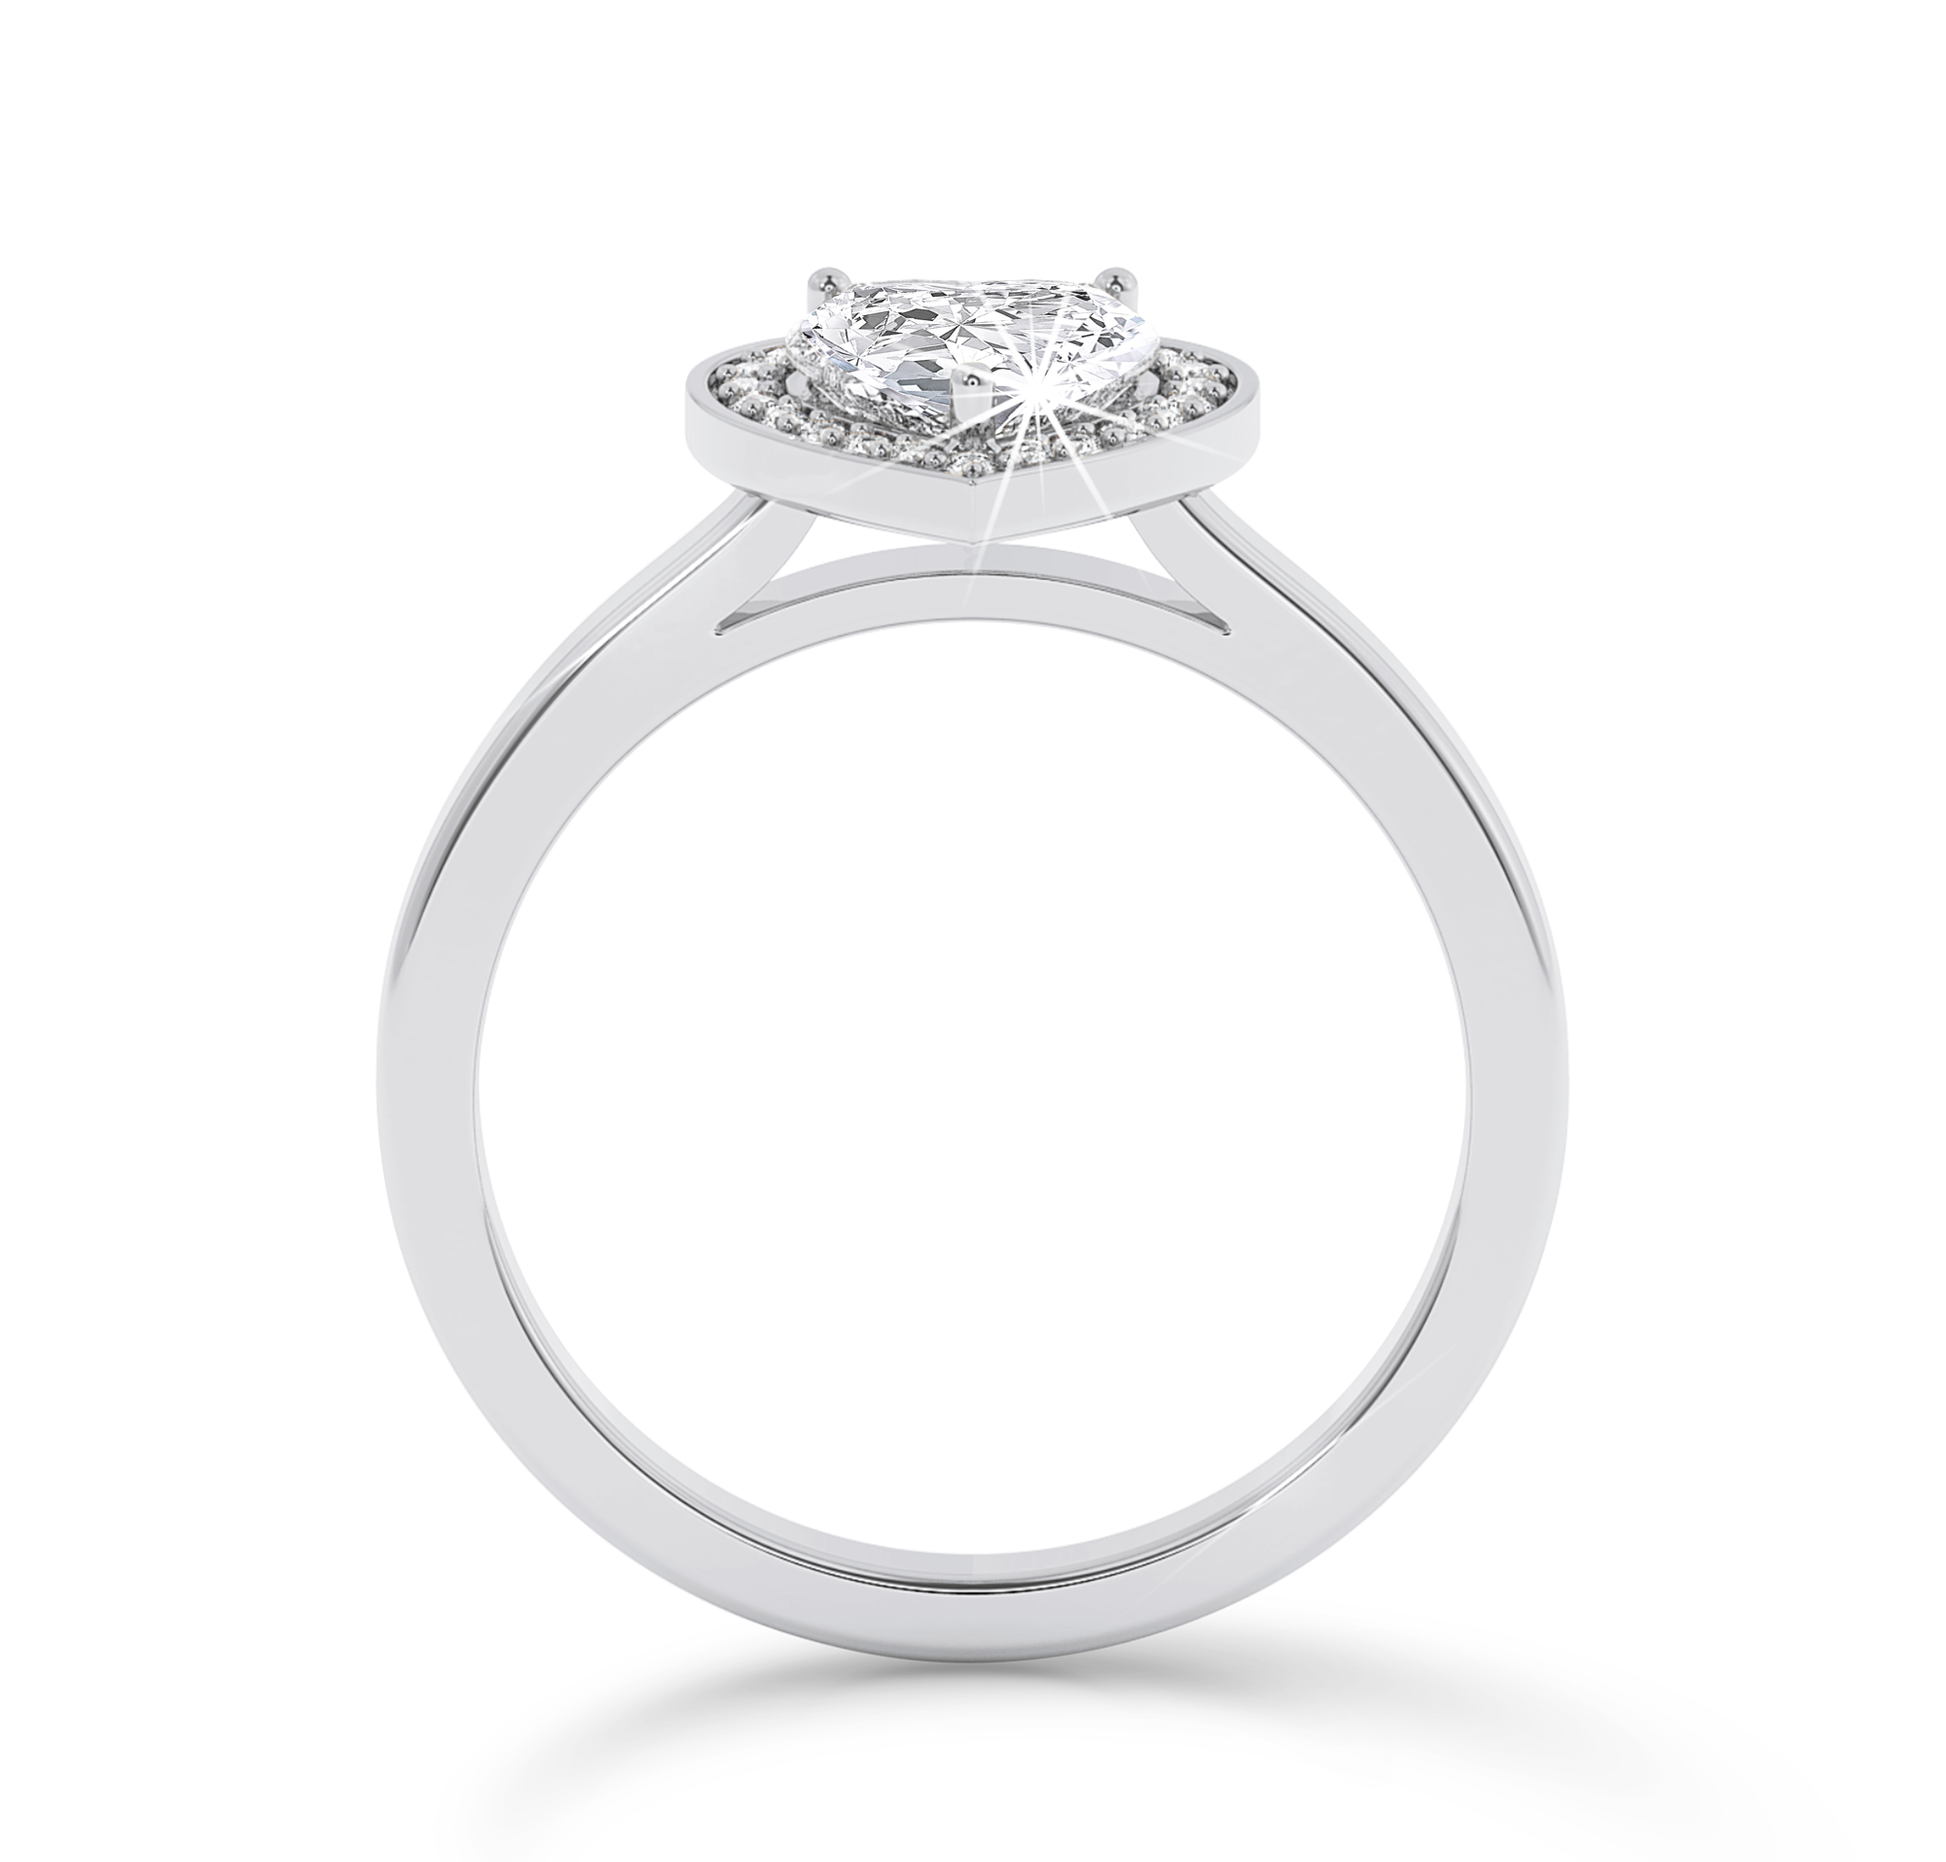 Heart Cut Diamond Ring with Halo - Platinum - Bodega